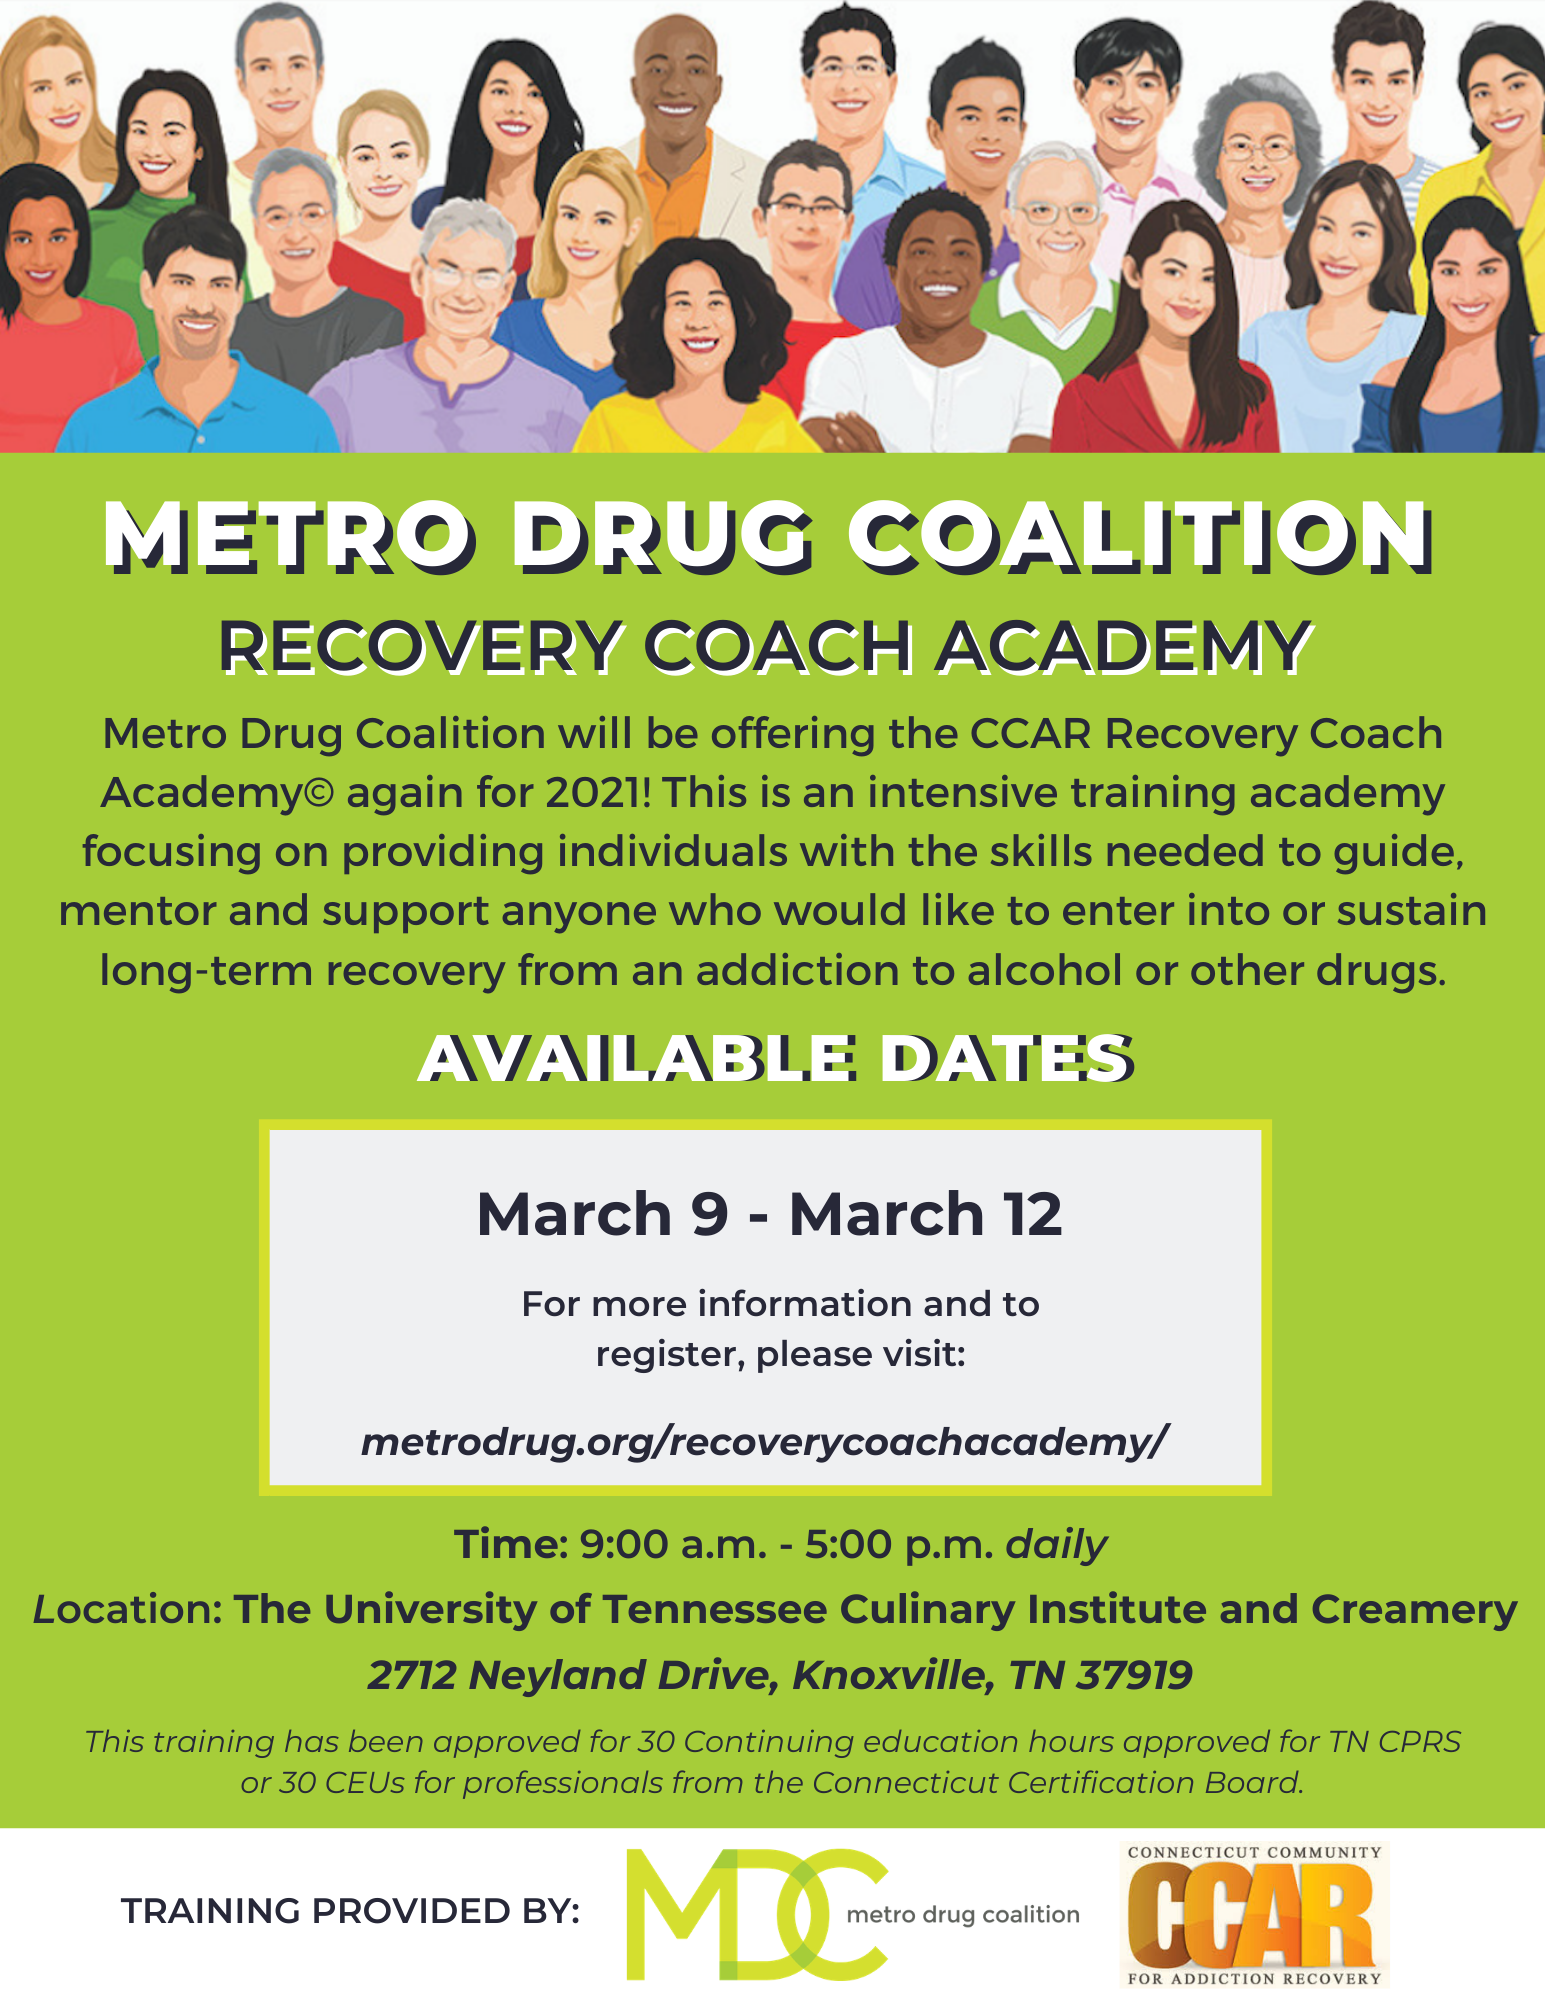 MDC Recovery Coach Academy – Metro Drug Coalition